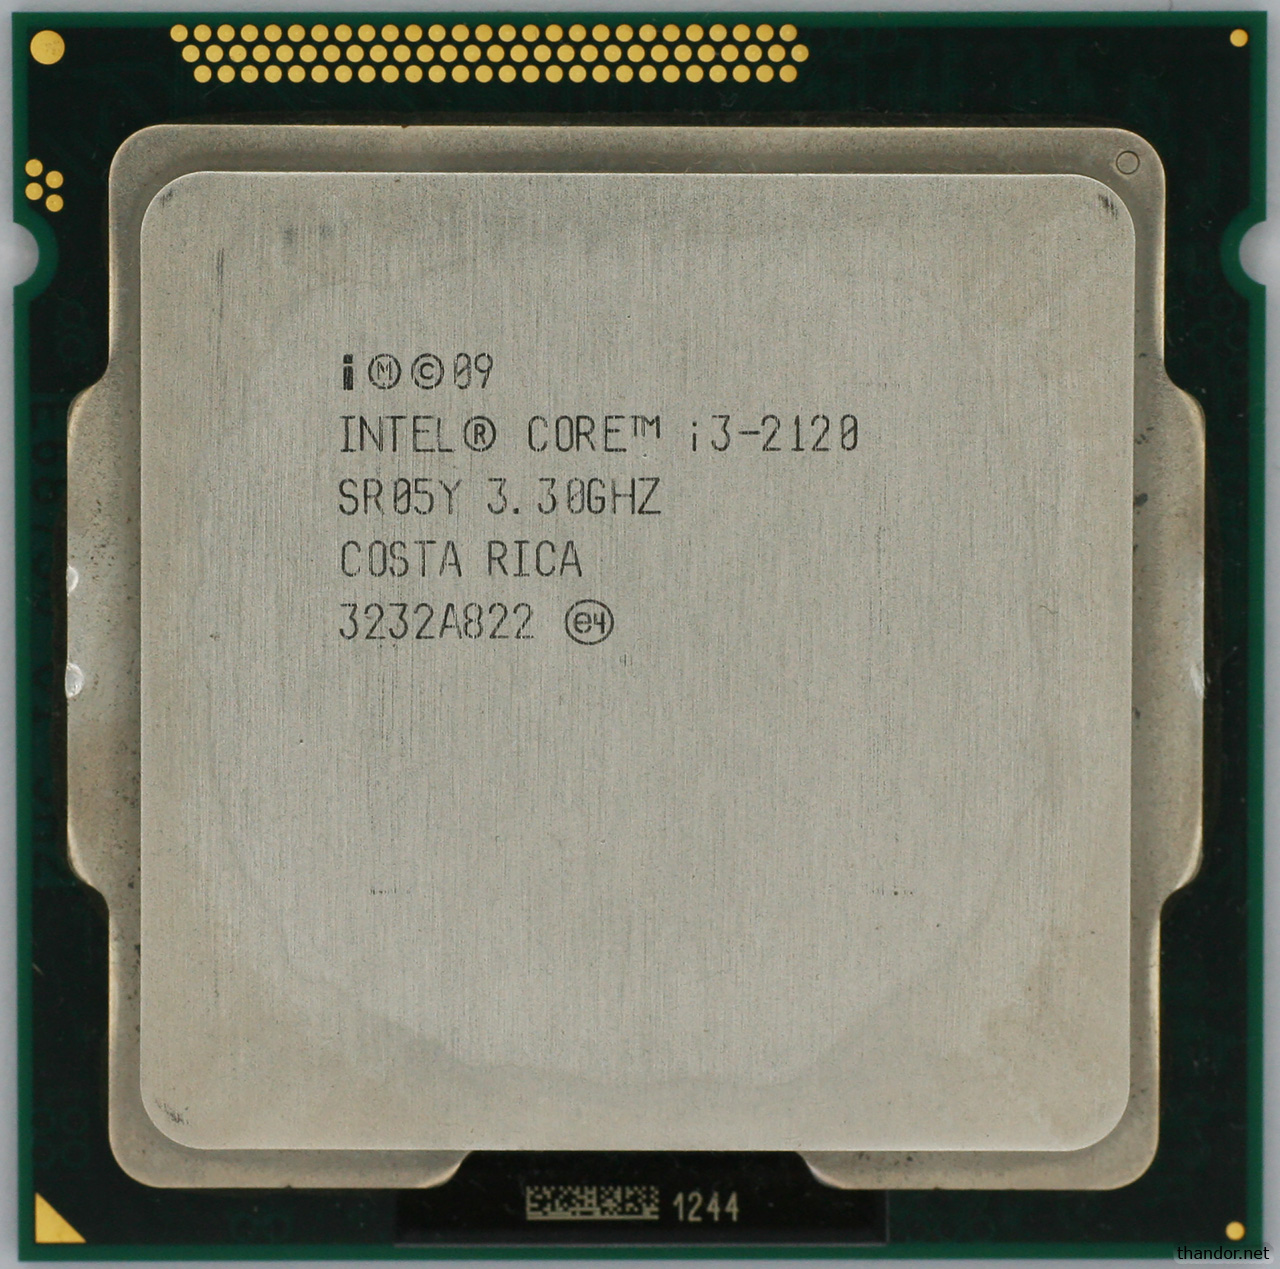 2120 сокет. Intel(r) Core(TM) i3-2120 CPU @ 3.30GHZ 3.30 GHZ. Характеристики ноутбучного Intel i3-2120m.